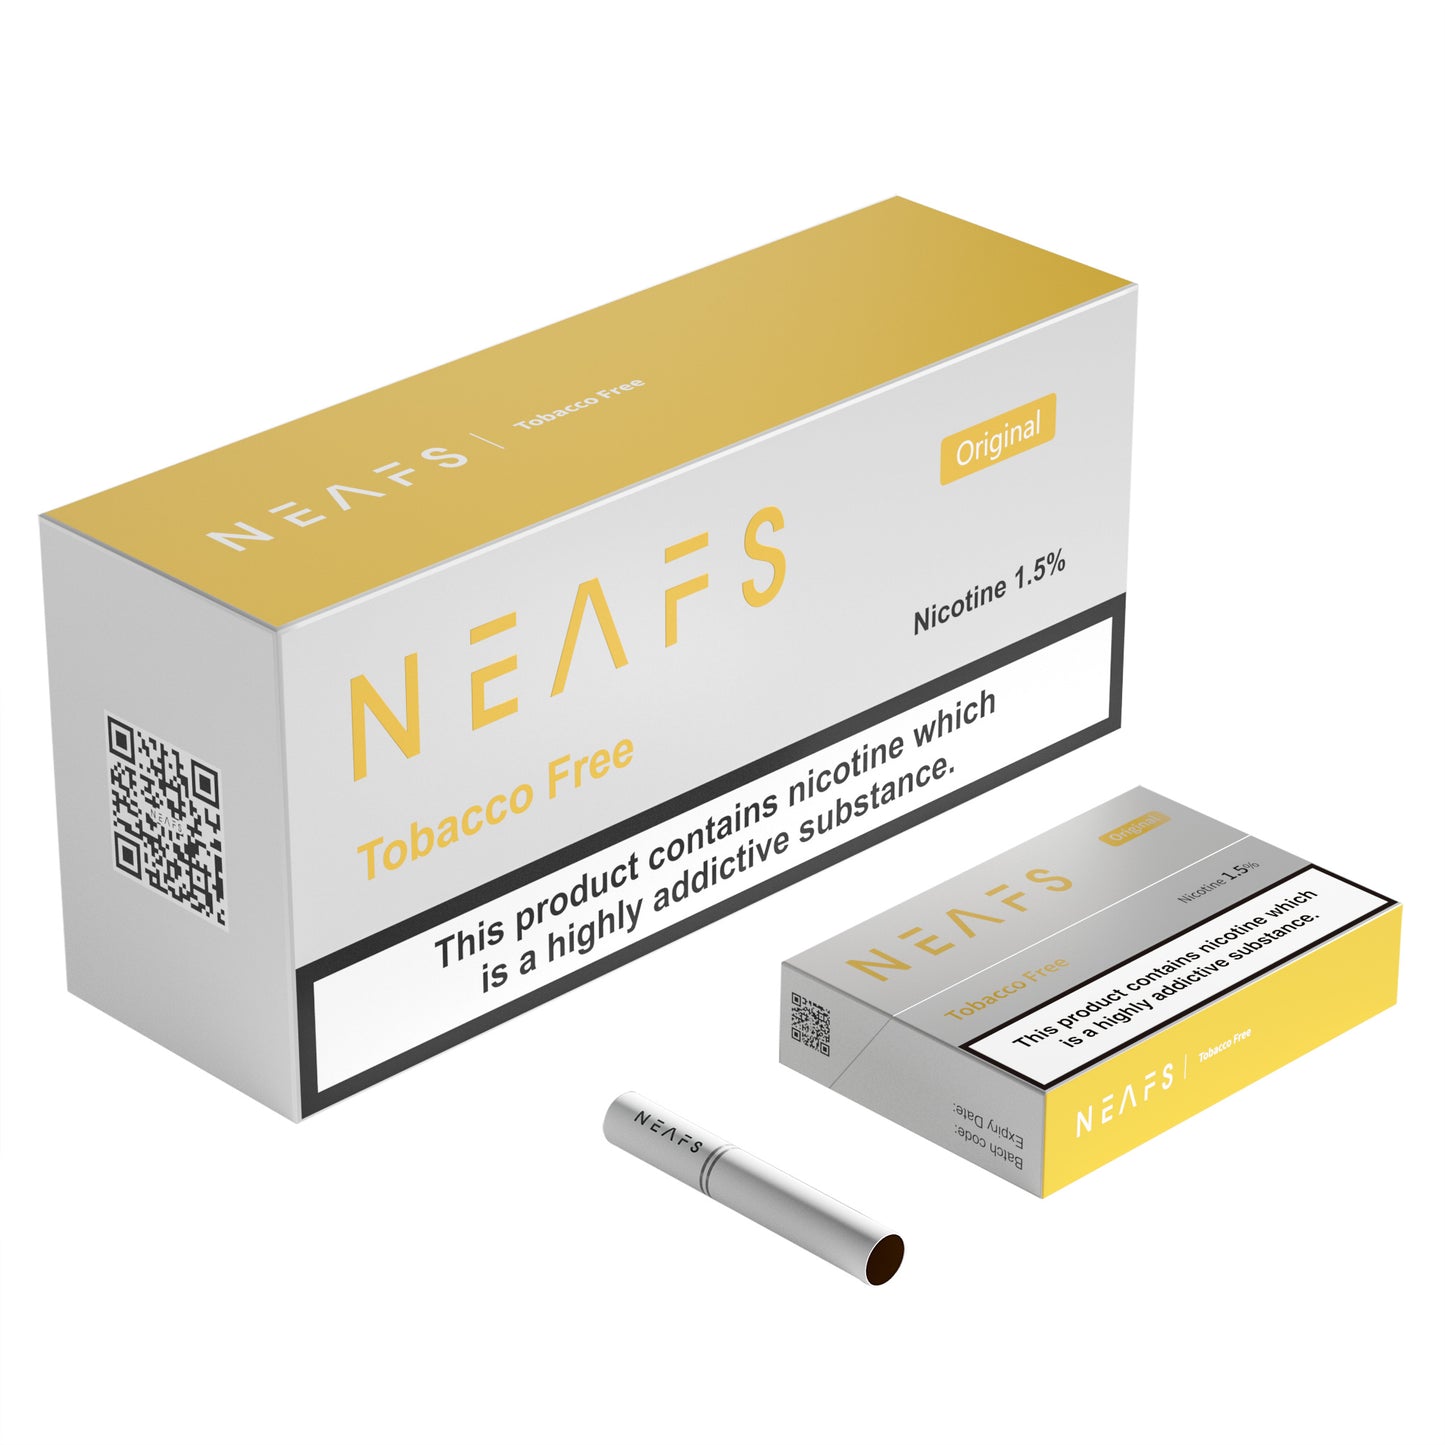 NEAFS Original Tobacco Free Heated Sticks